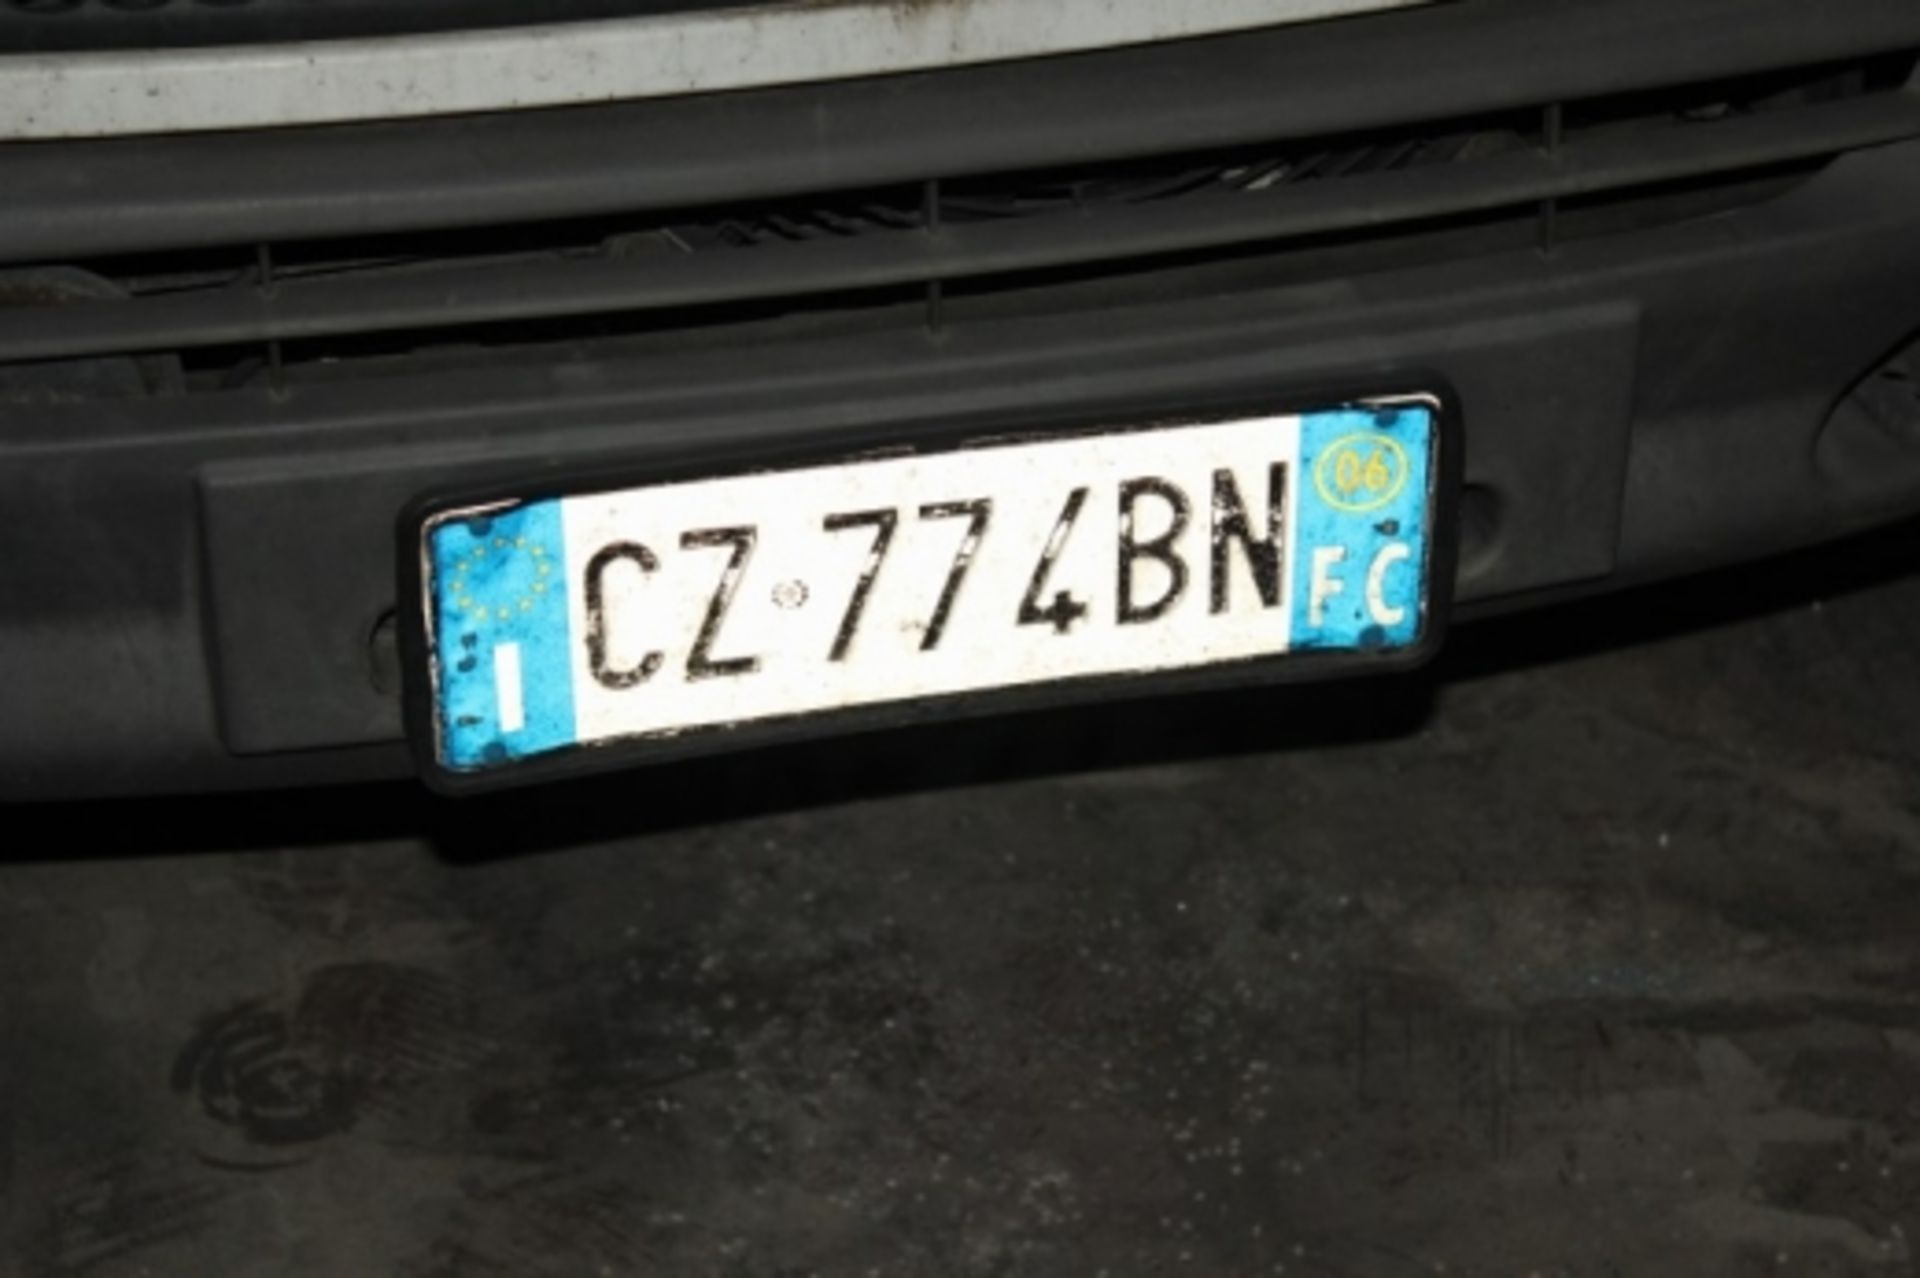 1,Truck (van) Mercedes Sprinter, plate: CZ774BN, first registered in: 2006, mileage: Km. 340.000 - Image 4 of 4